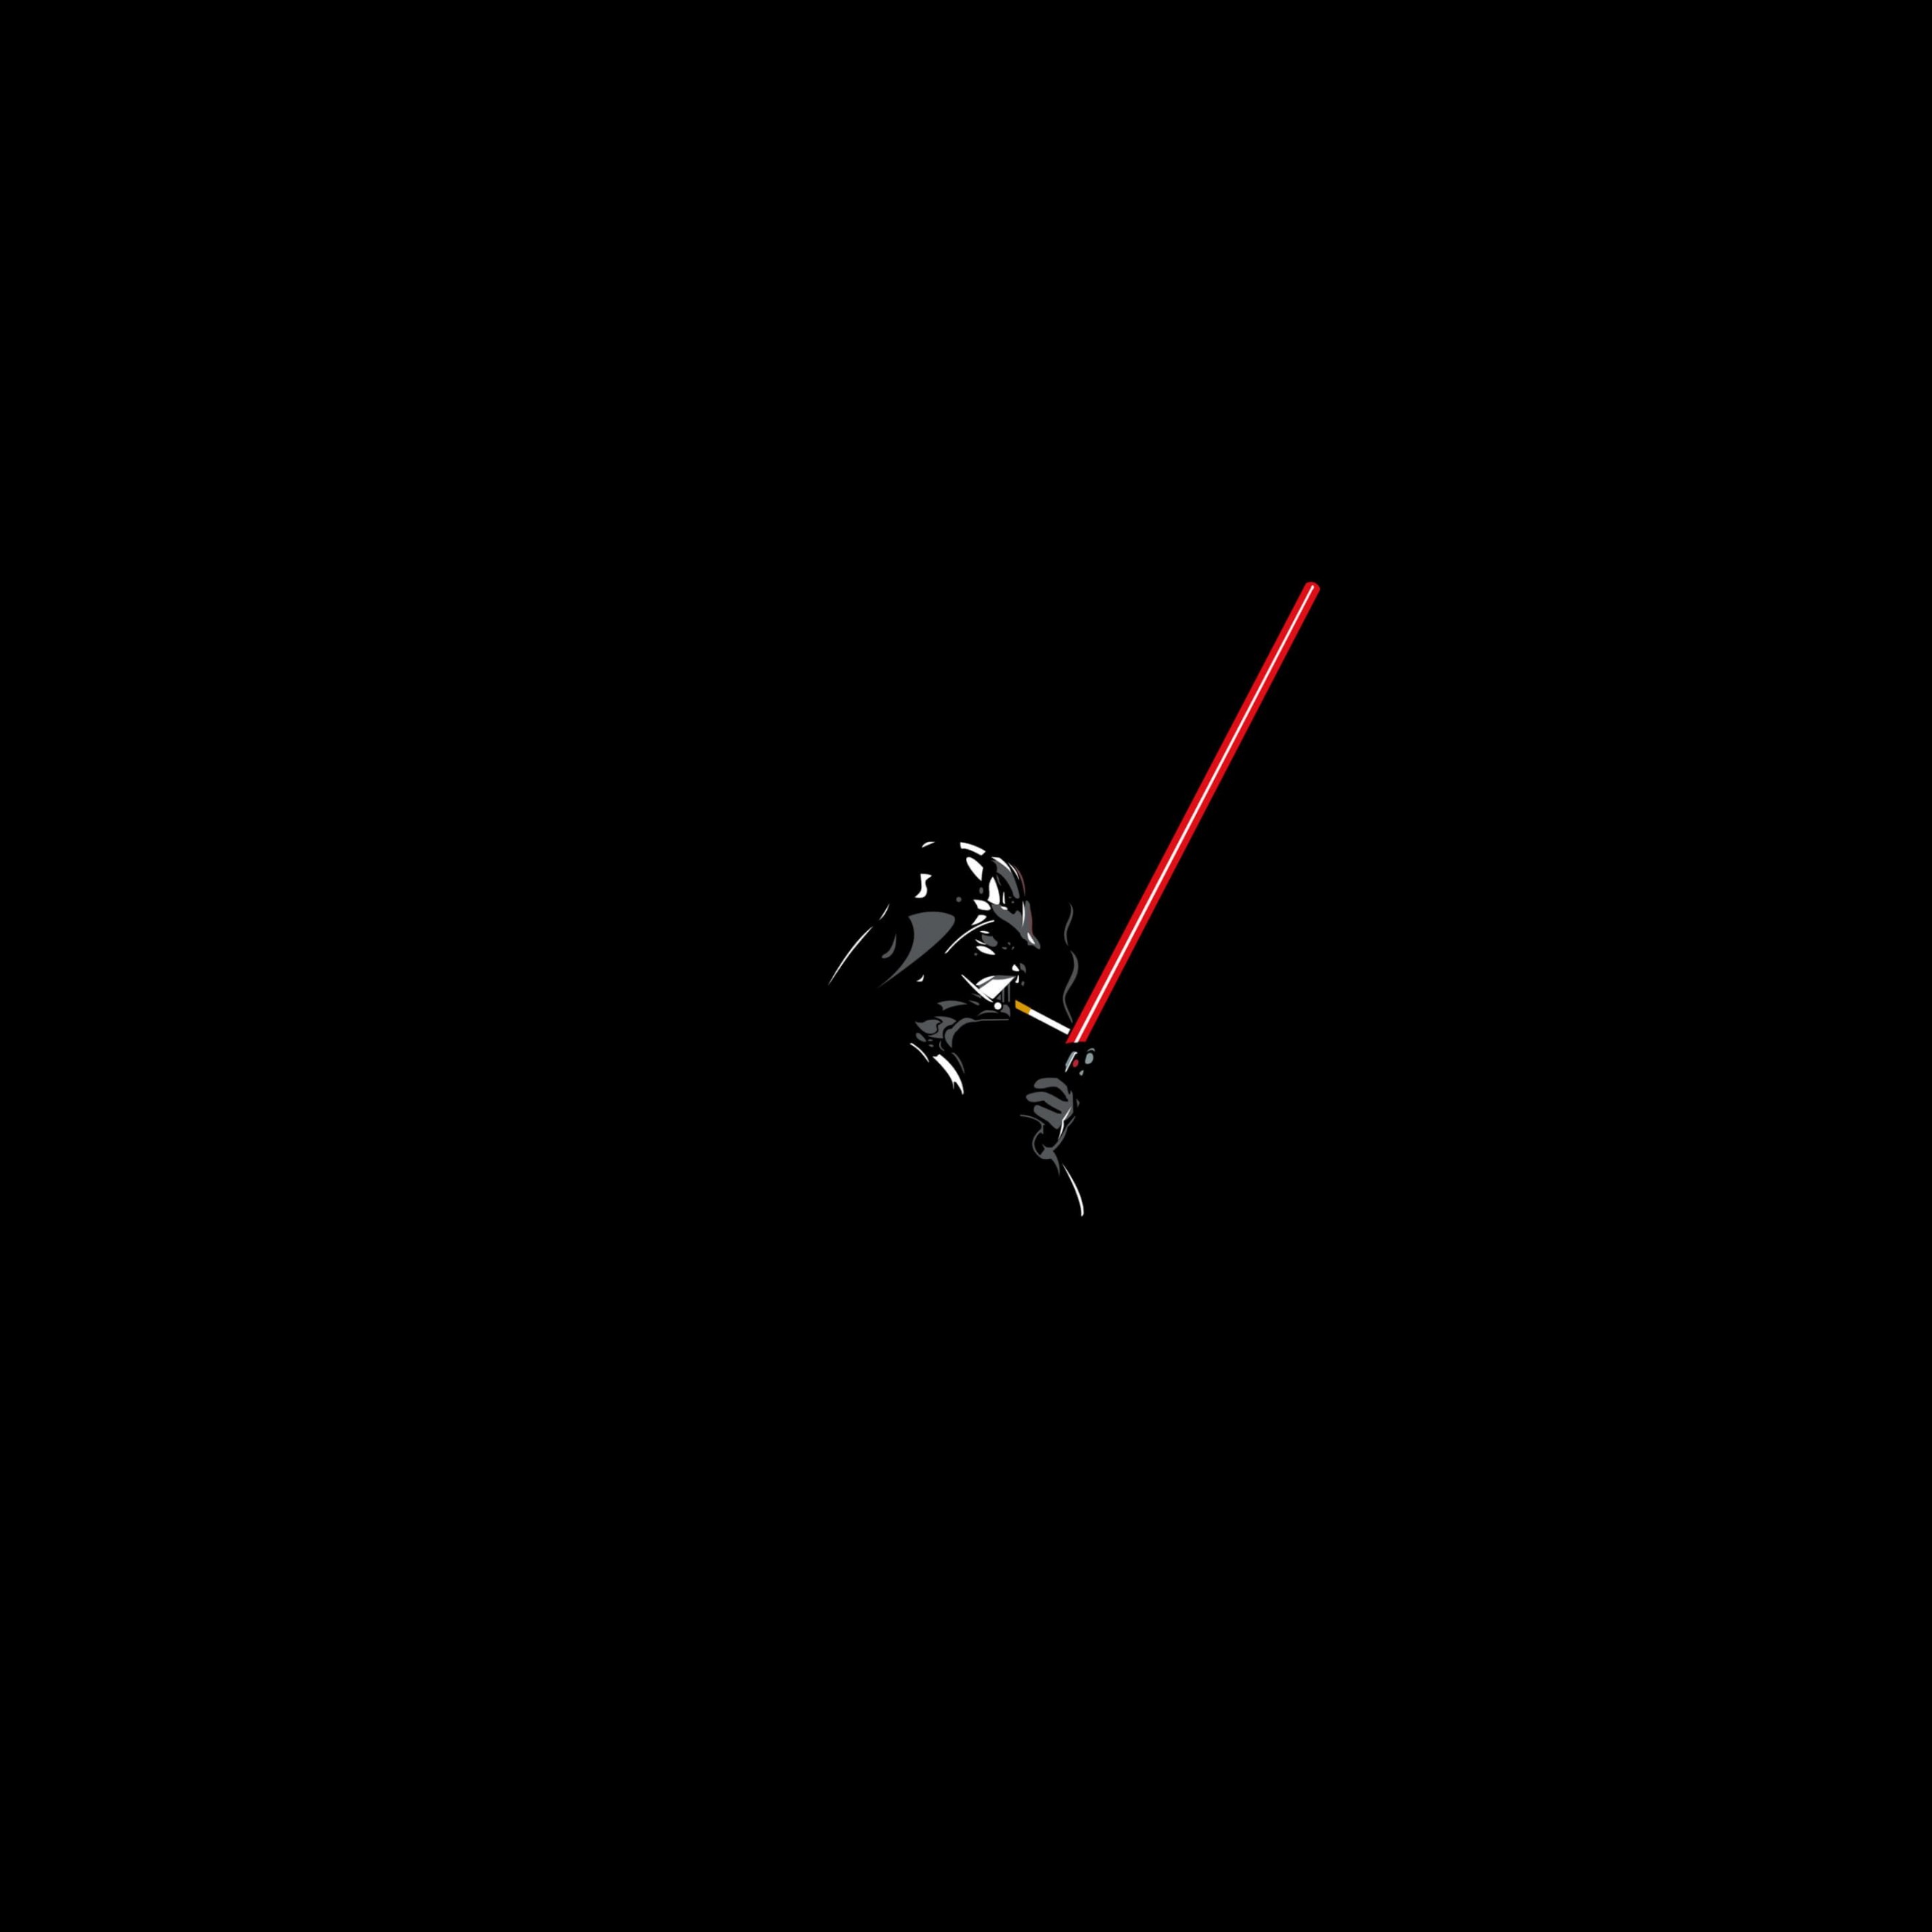 Darth Vader Lighting a Cigarette Wallpaper for Apple iPhone 6 Plus